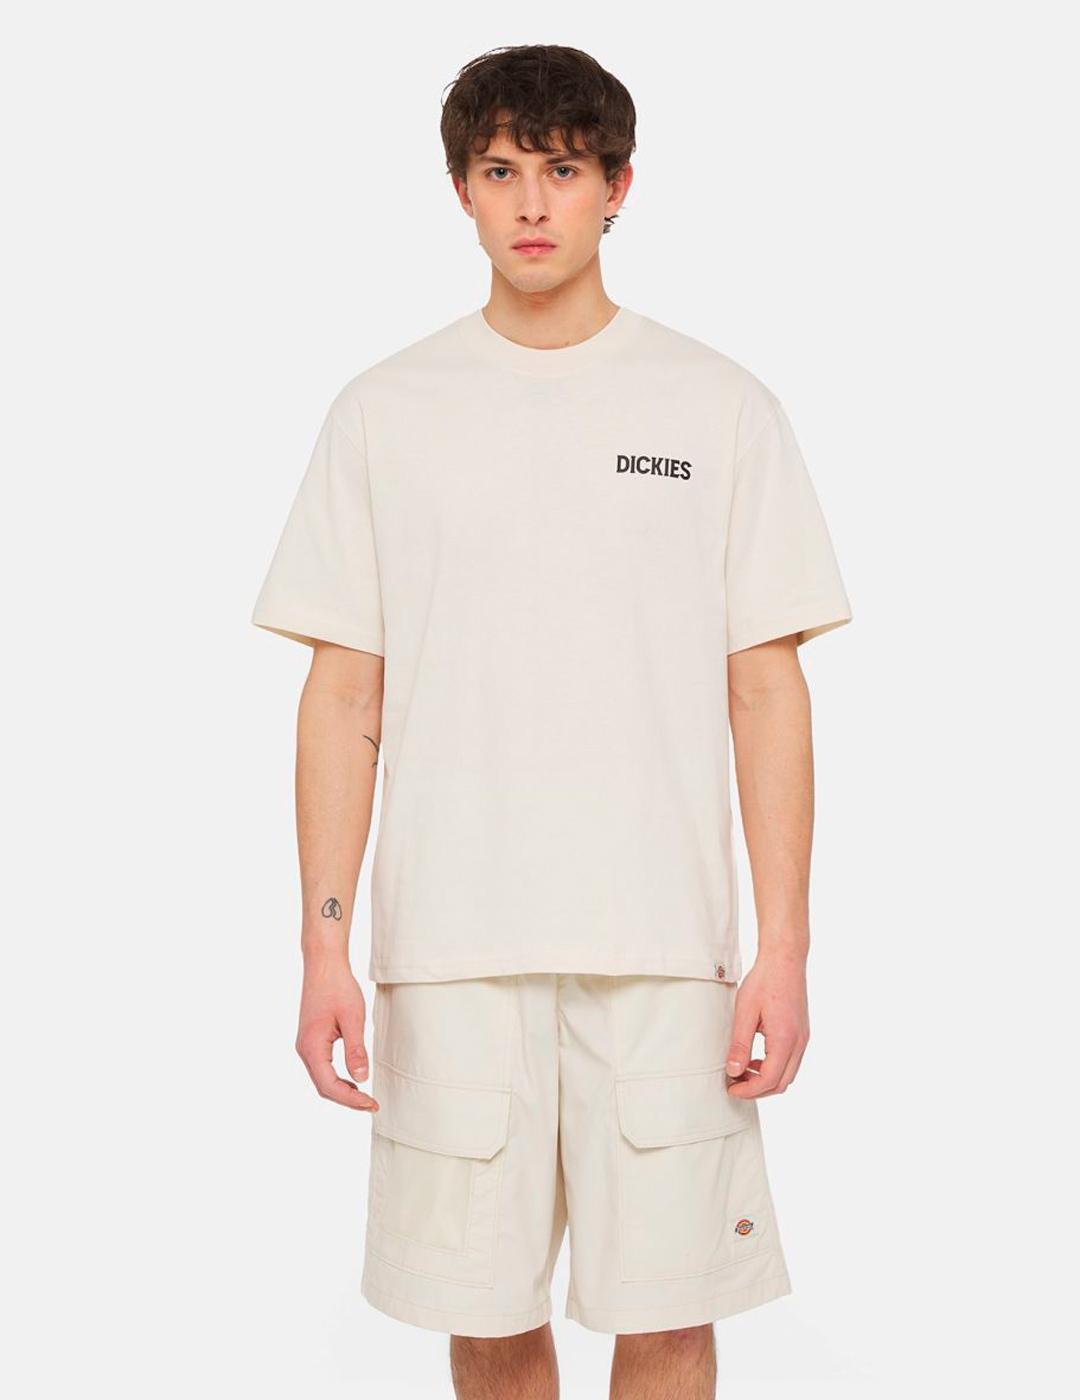 Camiseta DICKIES BEACH - Whitecap Gray